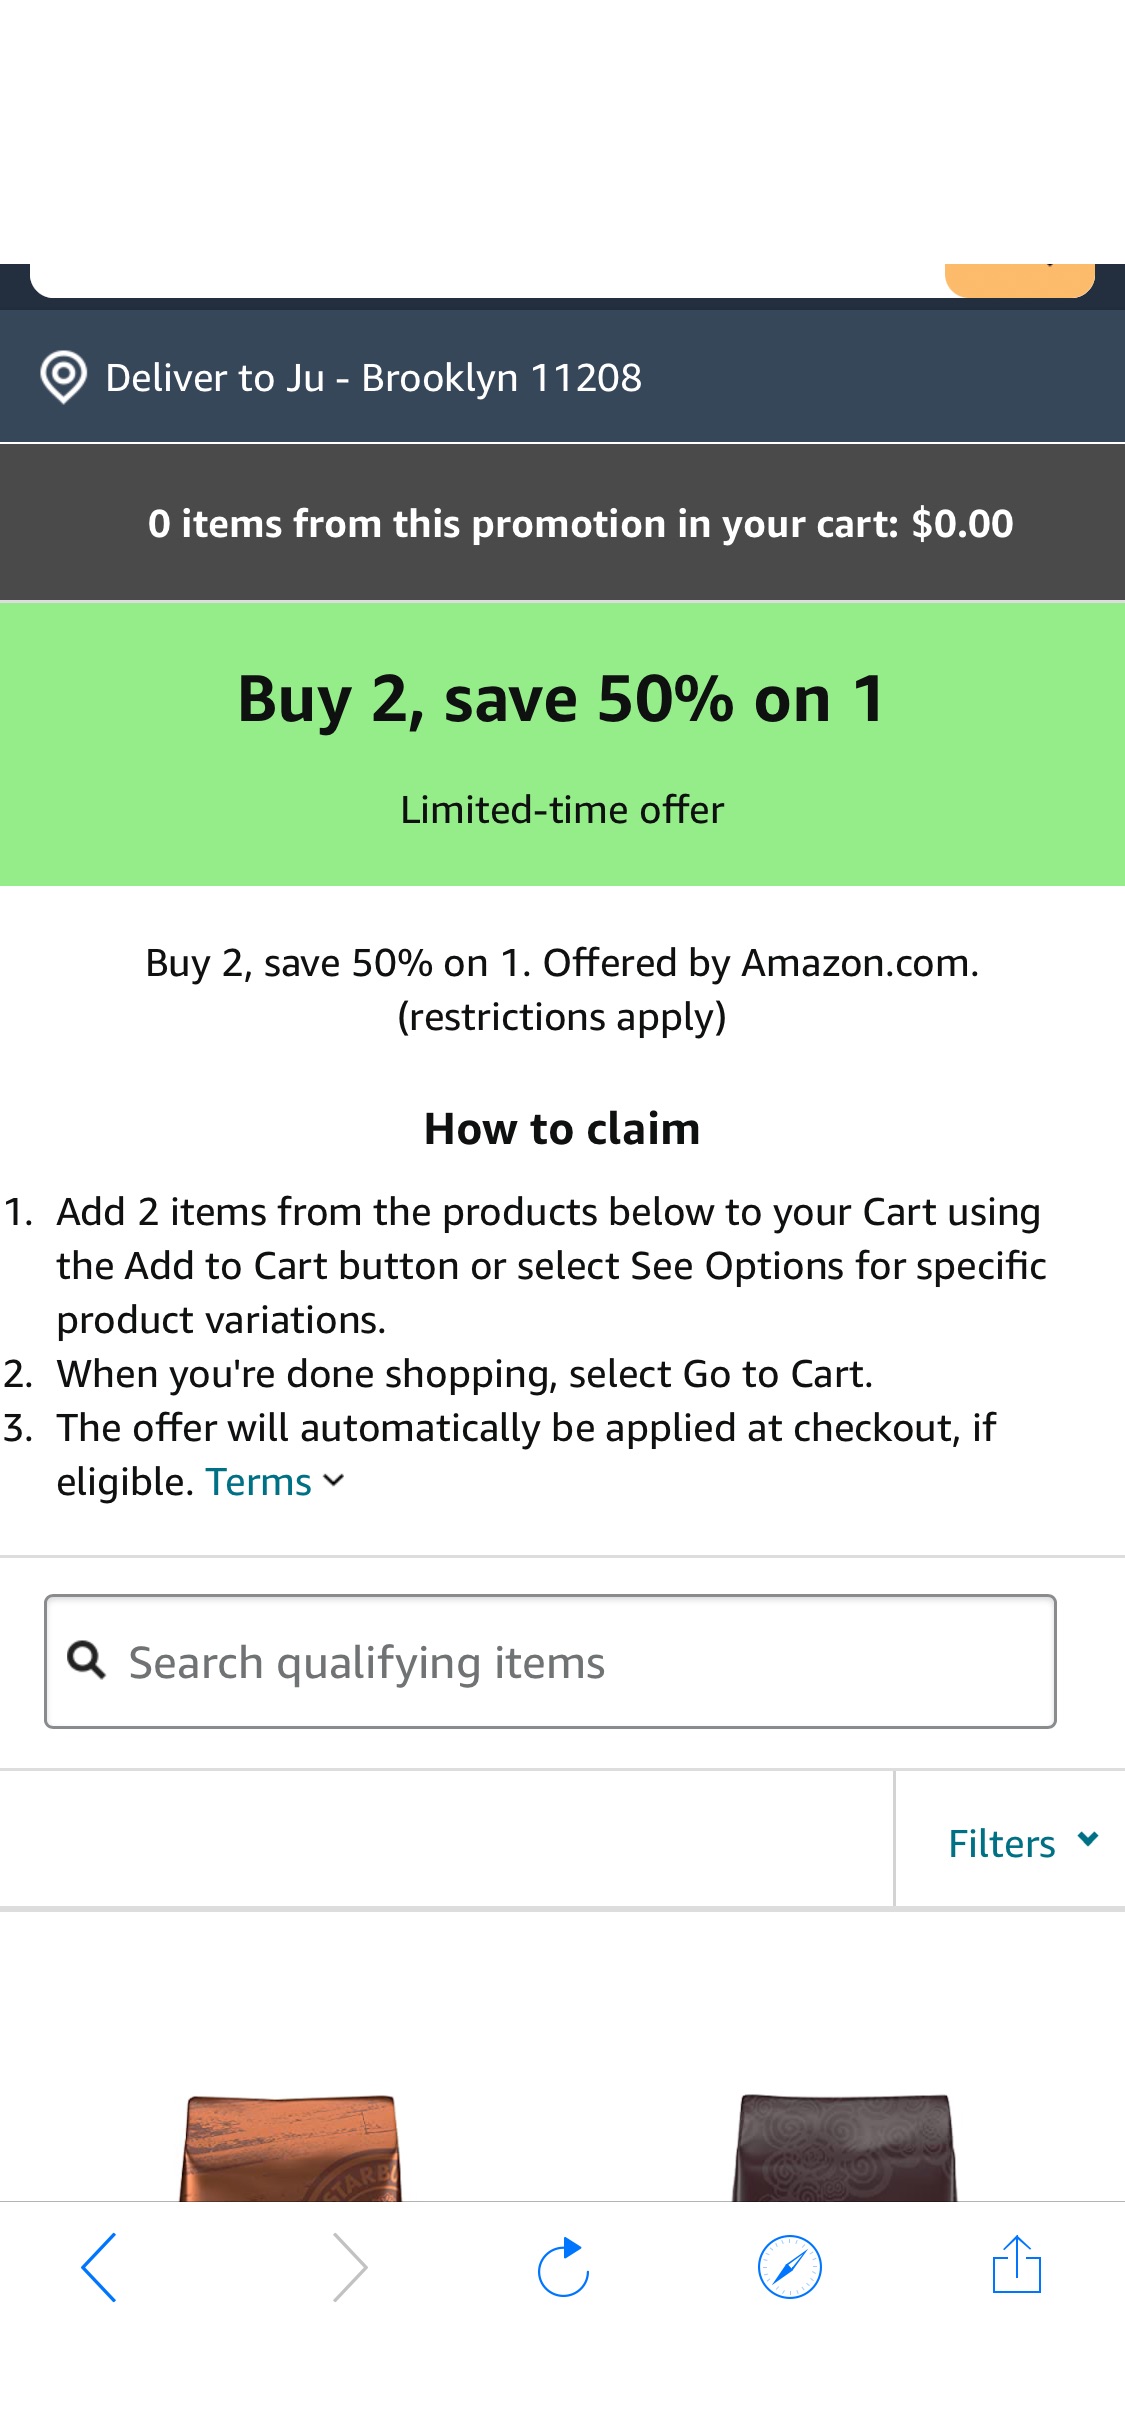 Amazon.com Buy 2, save 50% on 1 promotion 咖啡减价